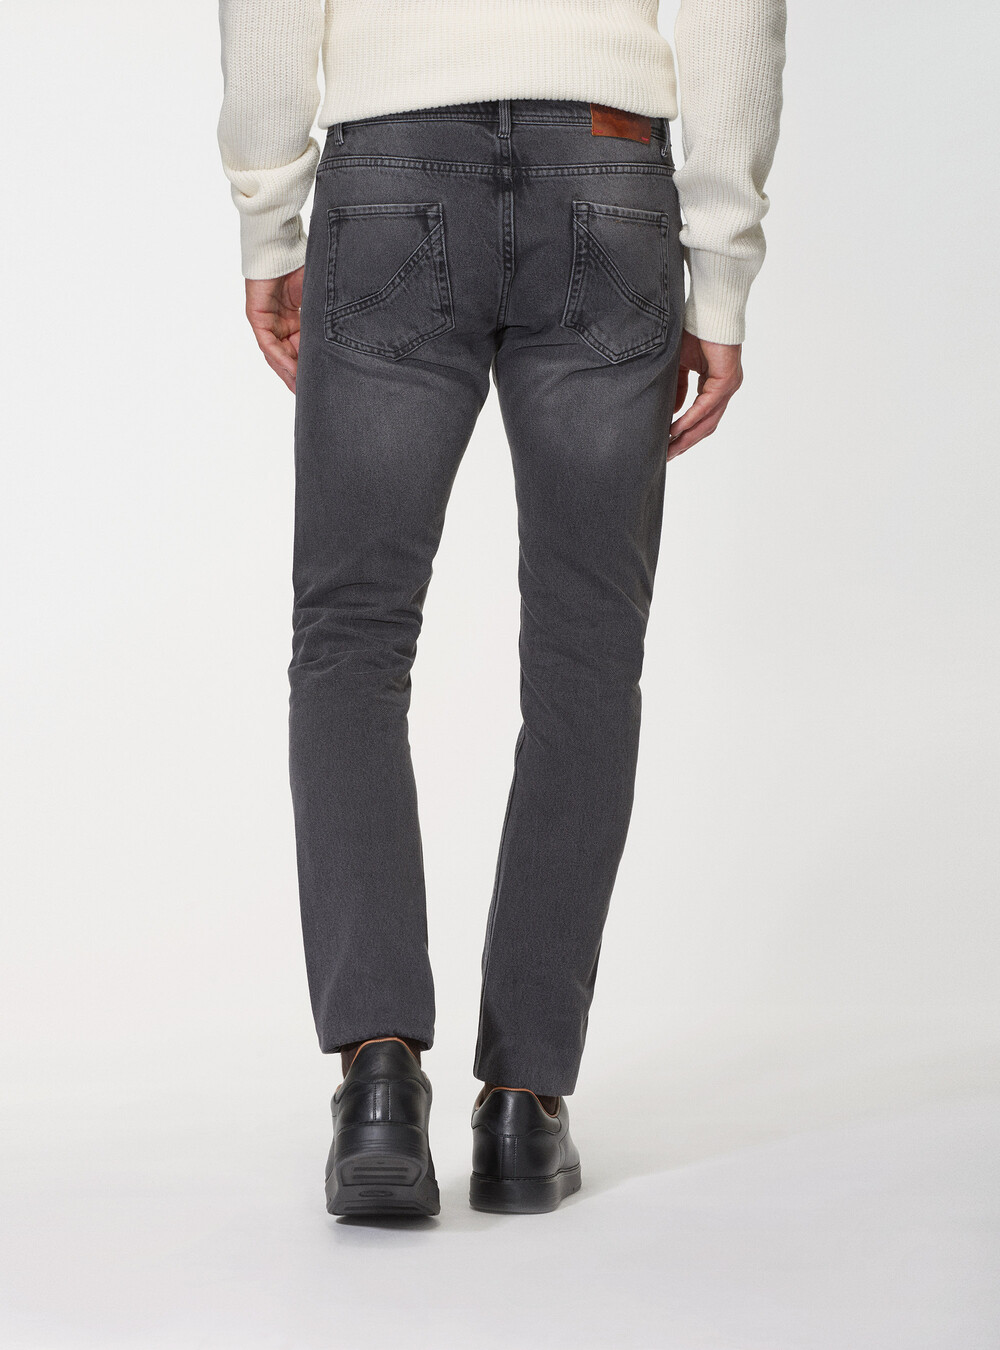 Jeans regular fit grigio scuro | Gutteridge | Jeans Uomo